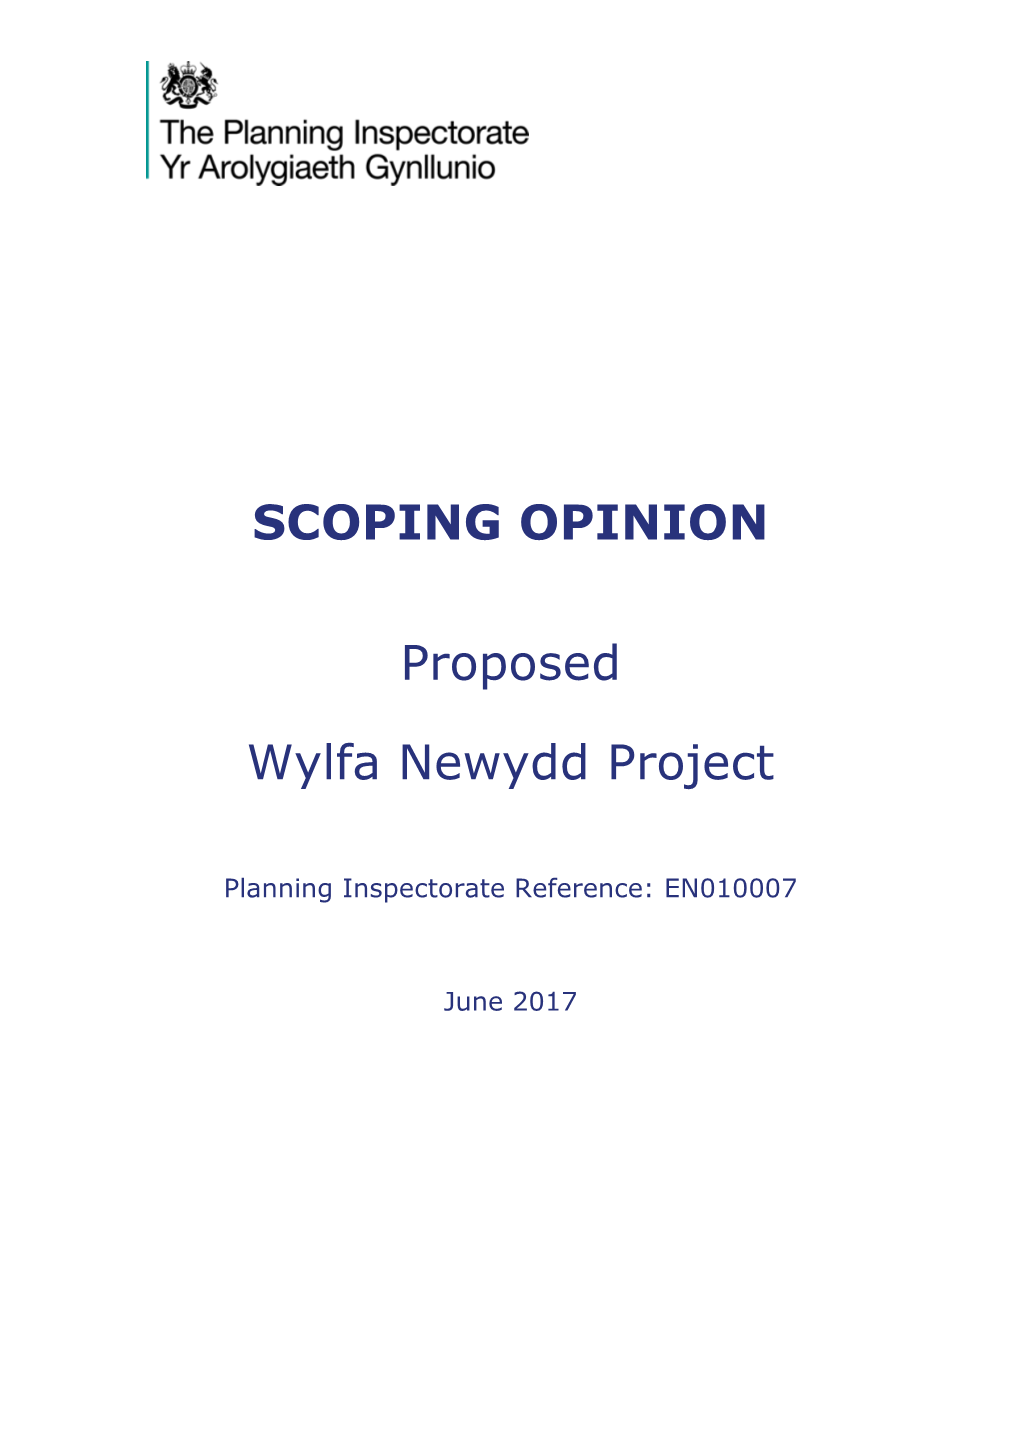 SCOPING OPINION Proposed Wylfa Newydd Project